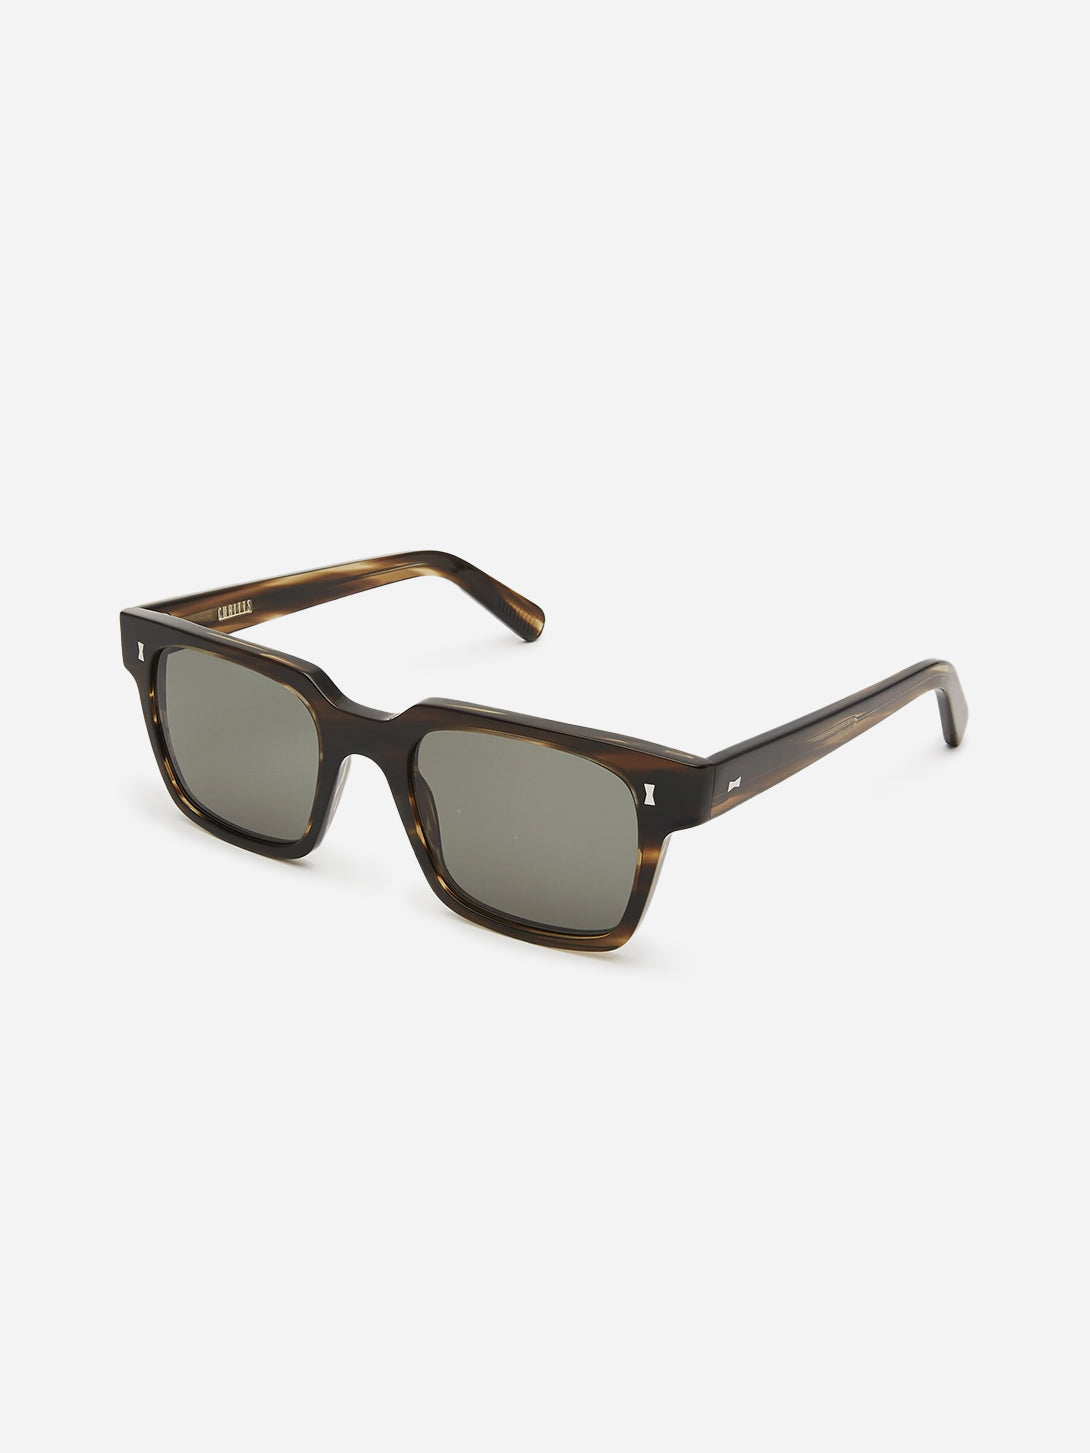 Olive Panton Cubitts Sunglasses